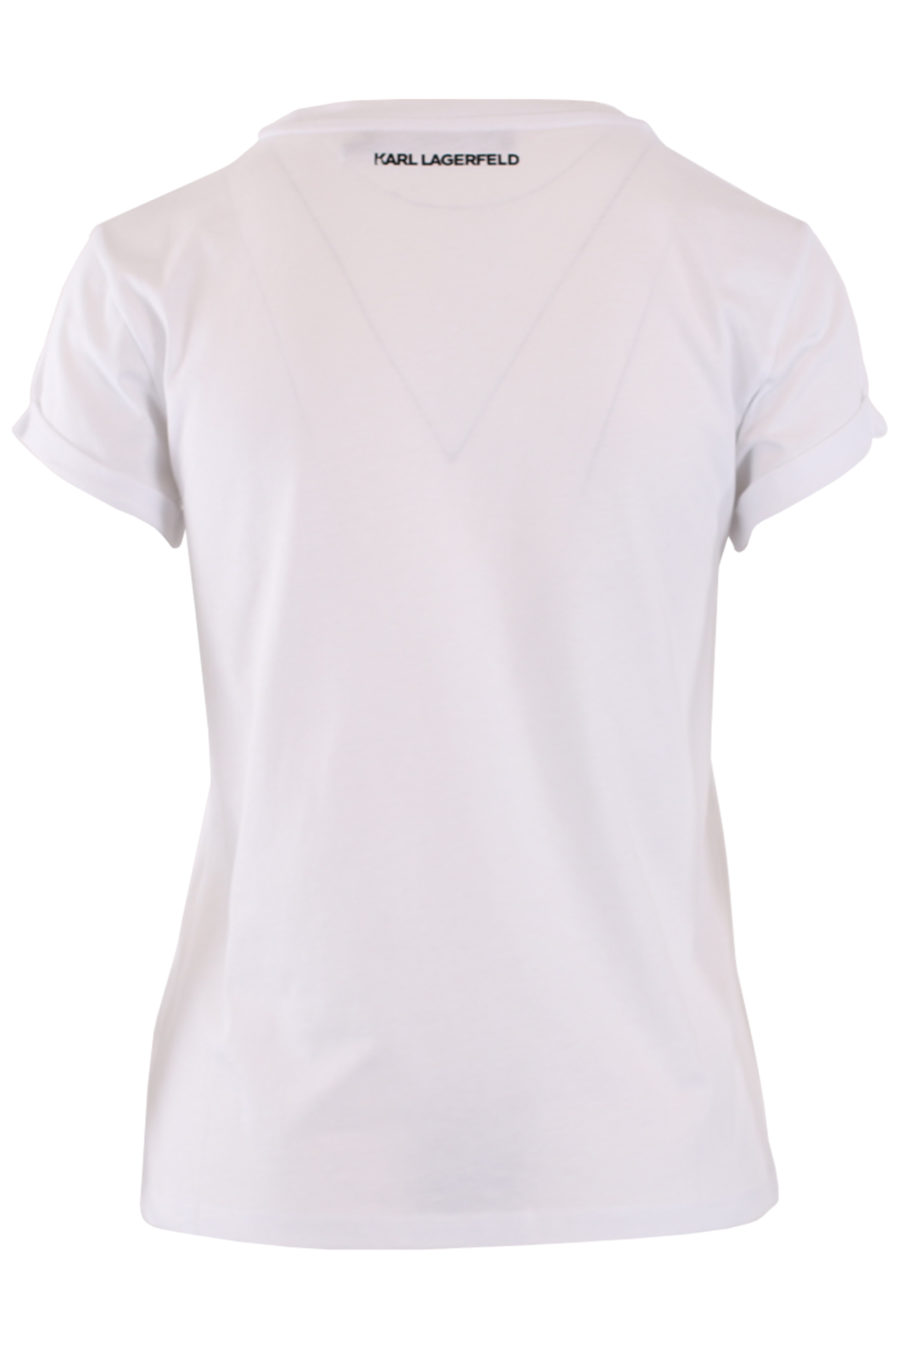 Camiseta blanca con logo y bolsillo - IMG 9002